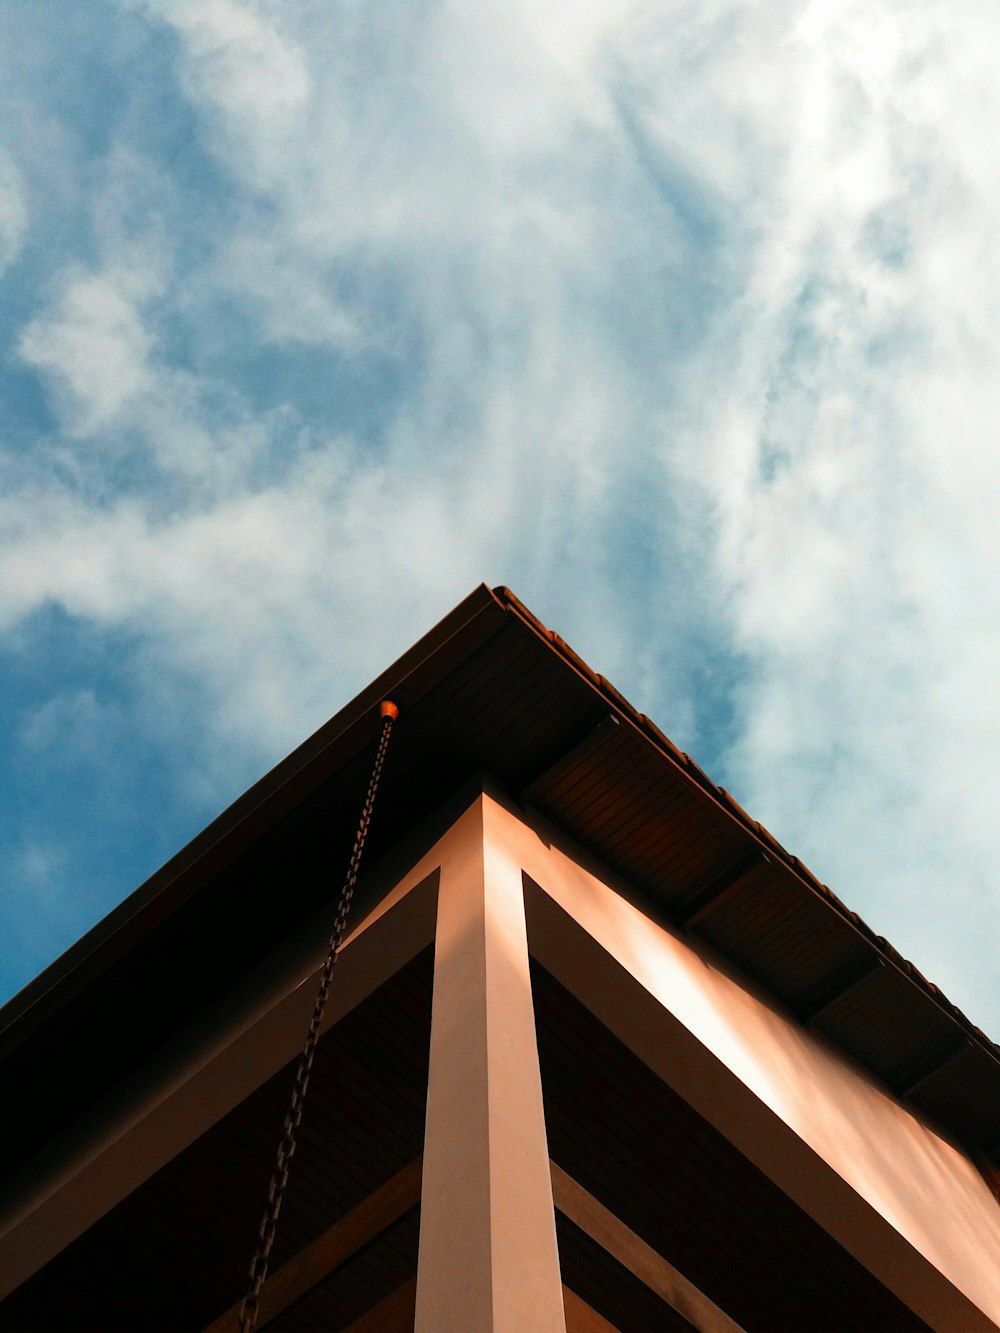 brown wooden roof under blue sky